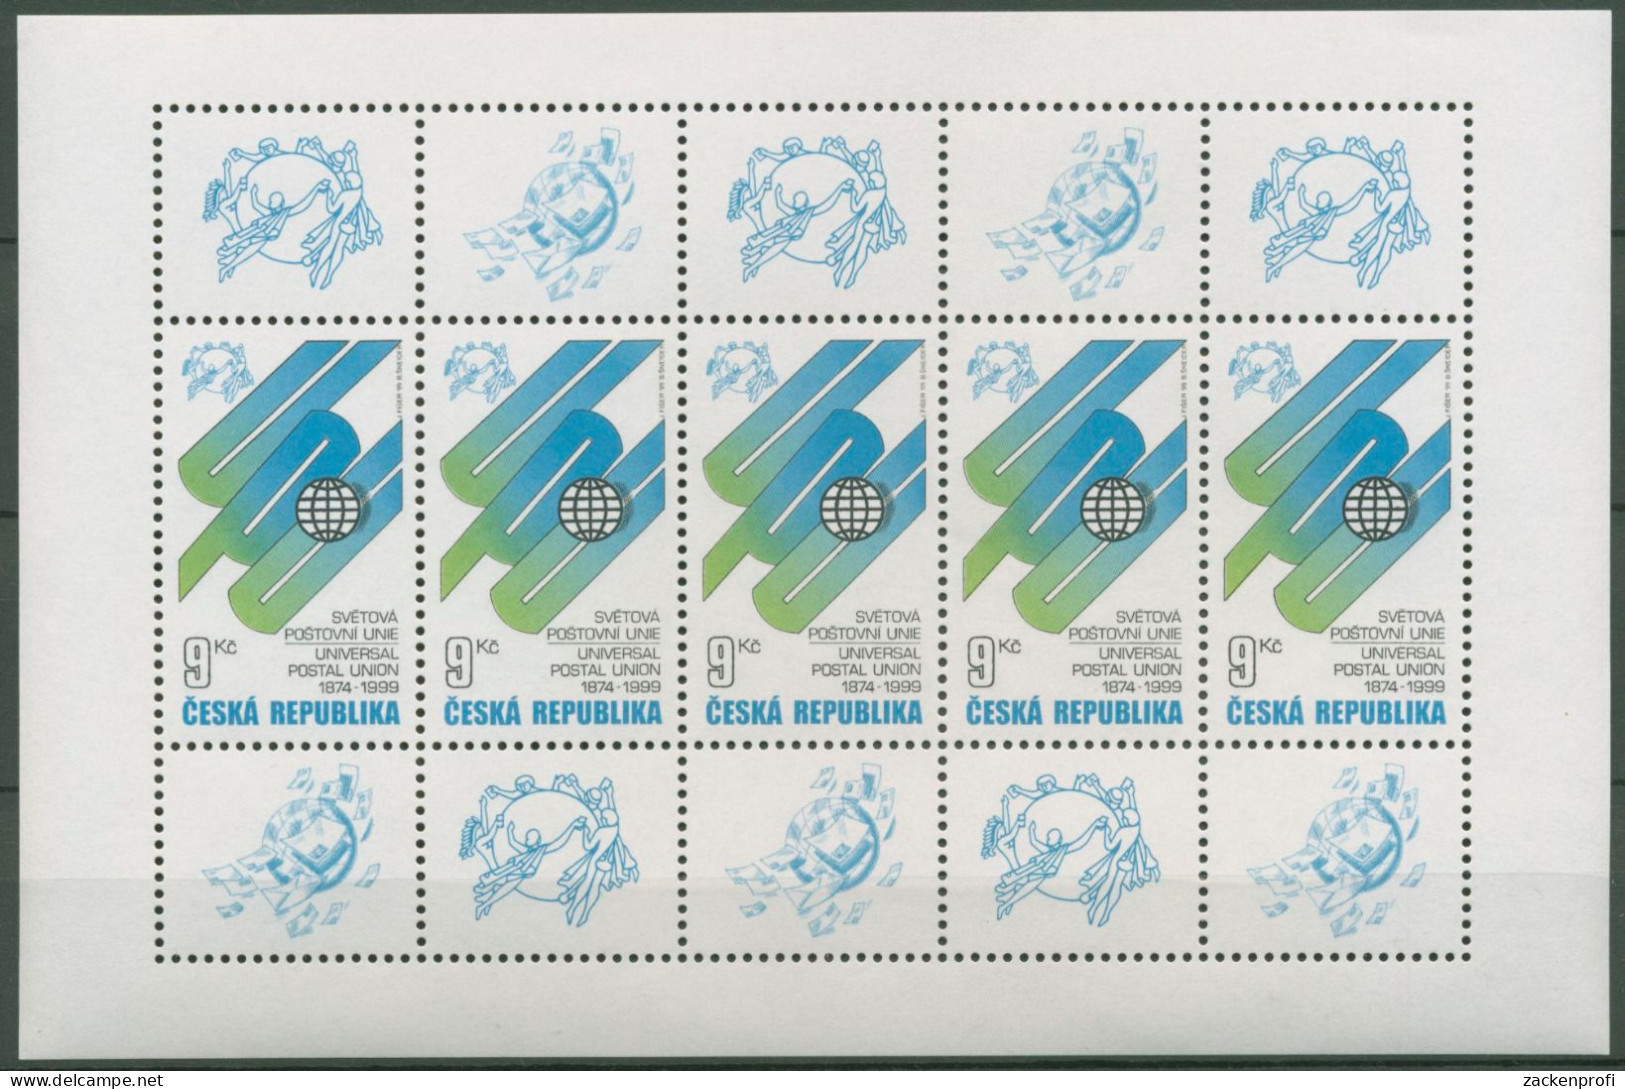 Tschechische Republik 1999 Weltpostverein UPU 224 K Postfrisch (C62769) - Blocs-feuillets